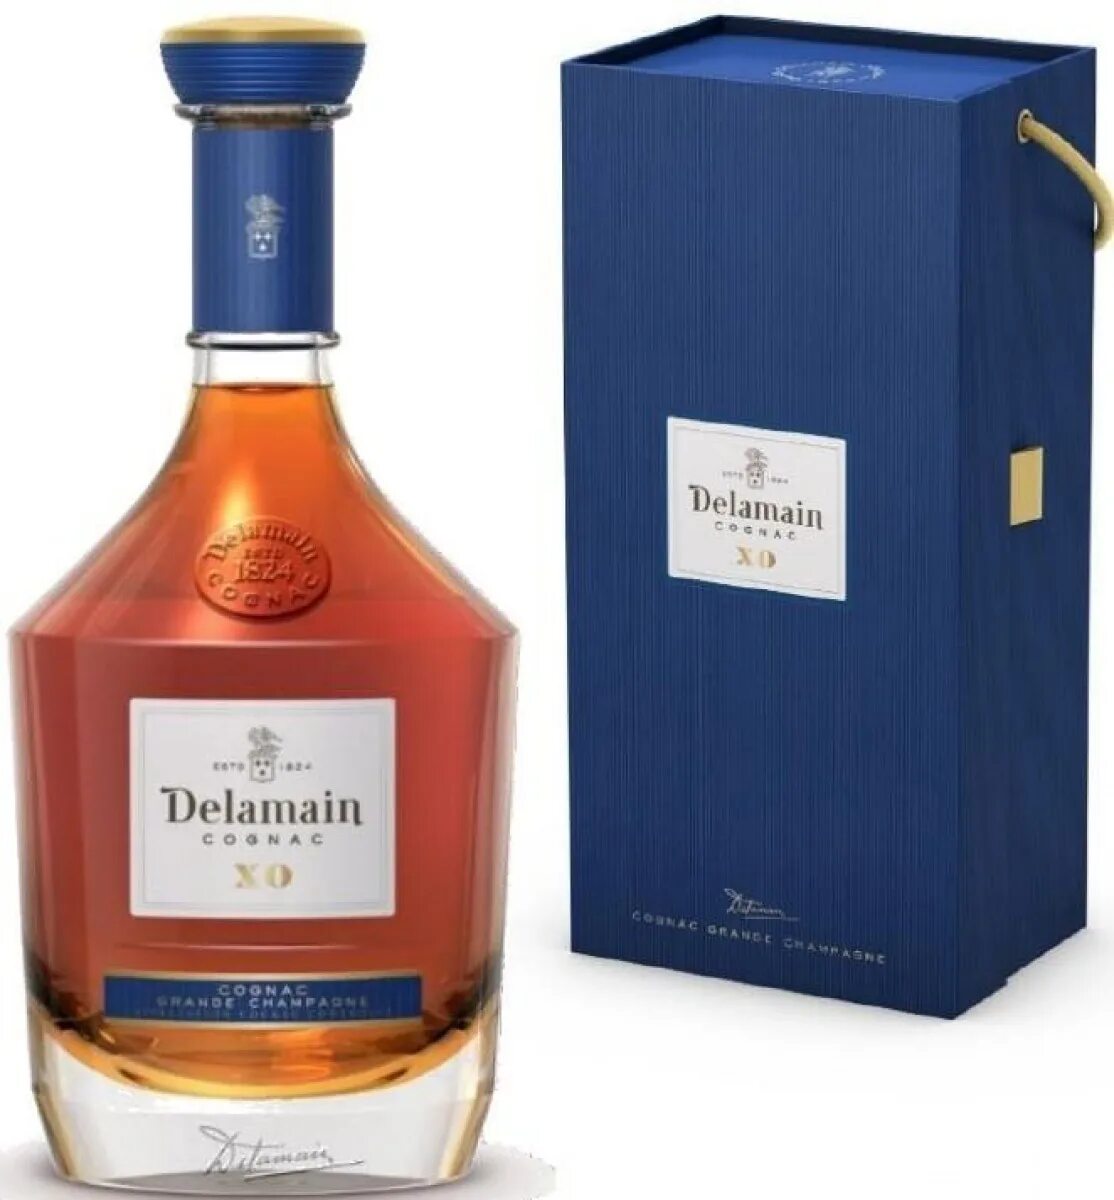 Delamain Cognac XO. Французский коньяк Delamain. Делямэн Хо Гранд шампань коньяк. Delamain Cognac 1967. Champagne xo cognac